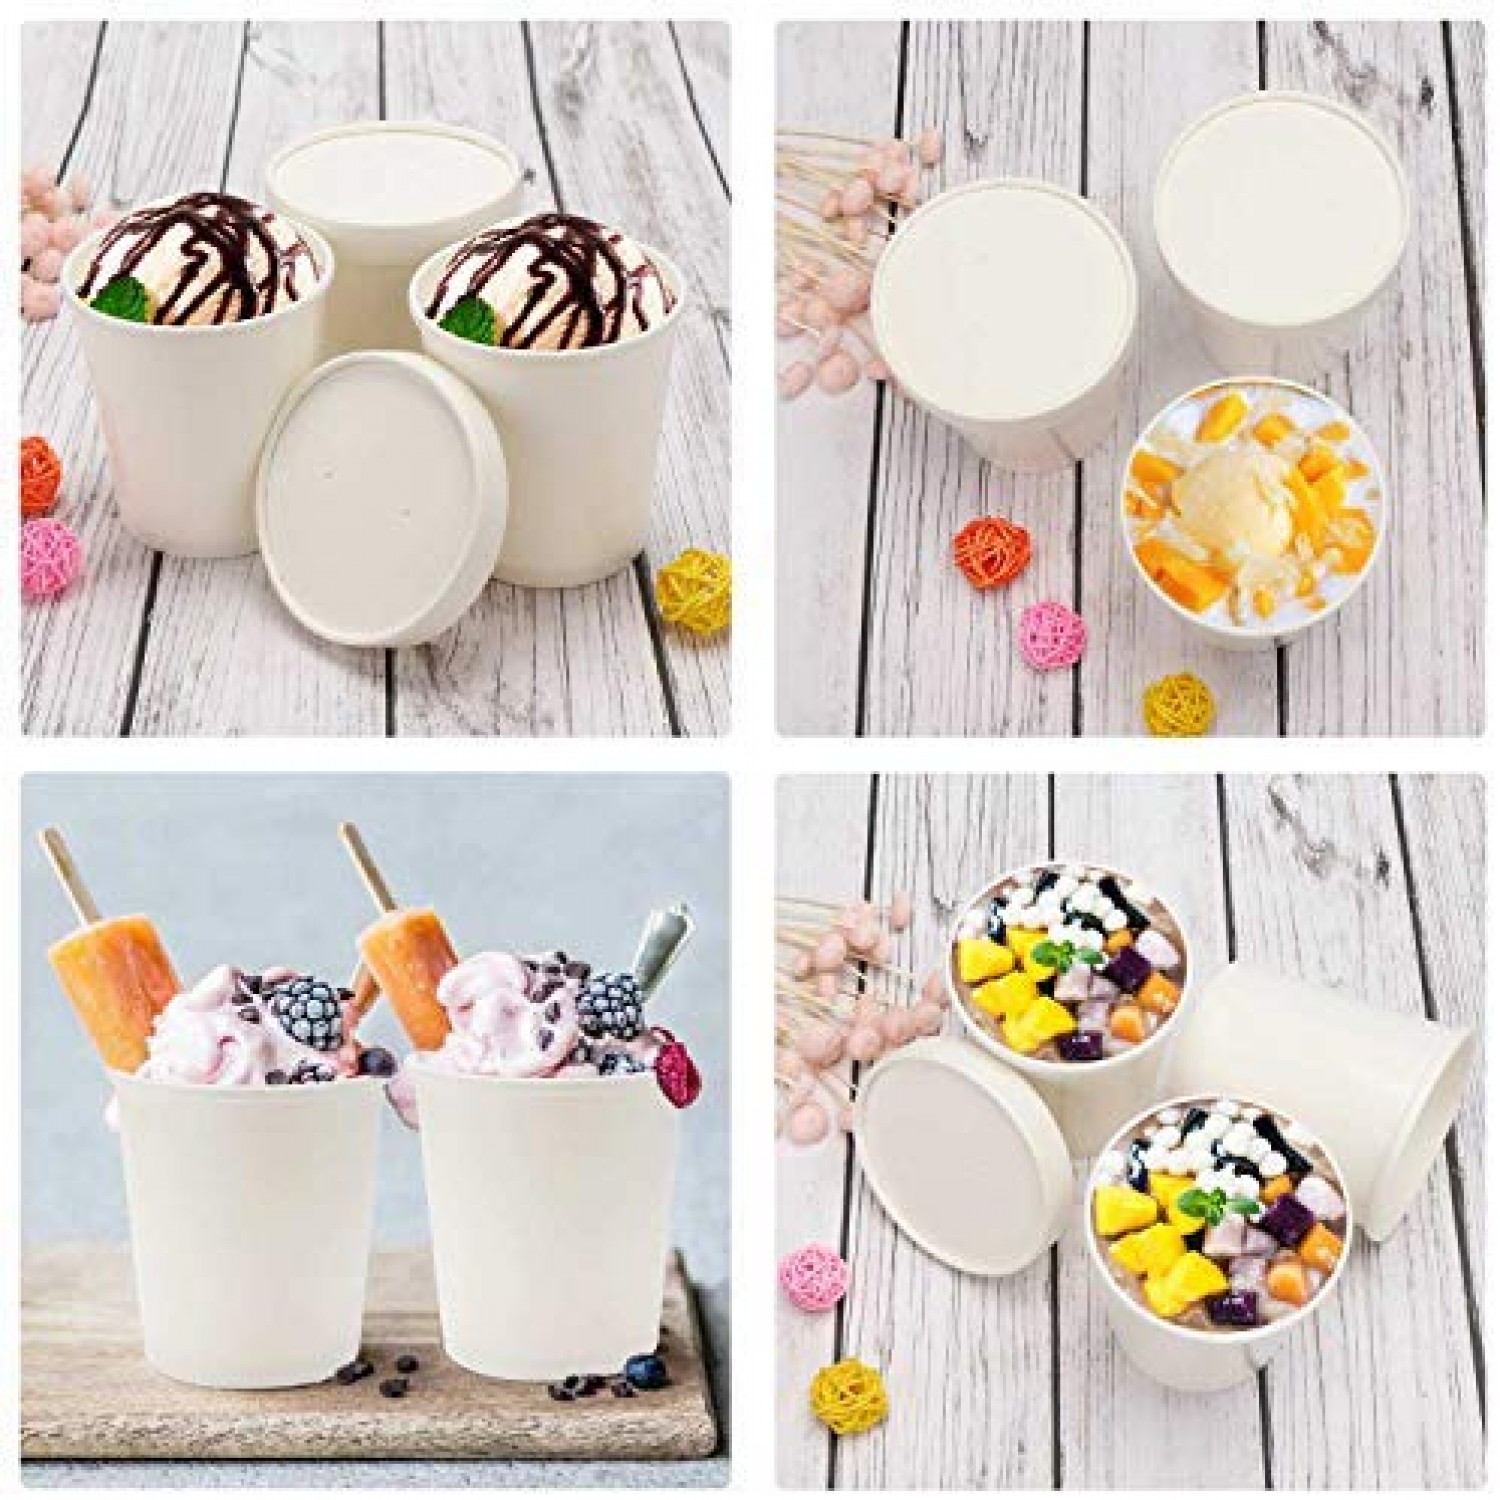 UNIQIFY® Quart 32 oz Ice Cream To Go Containers With Non-Vented Lids